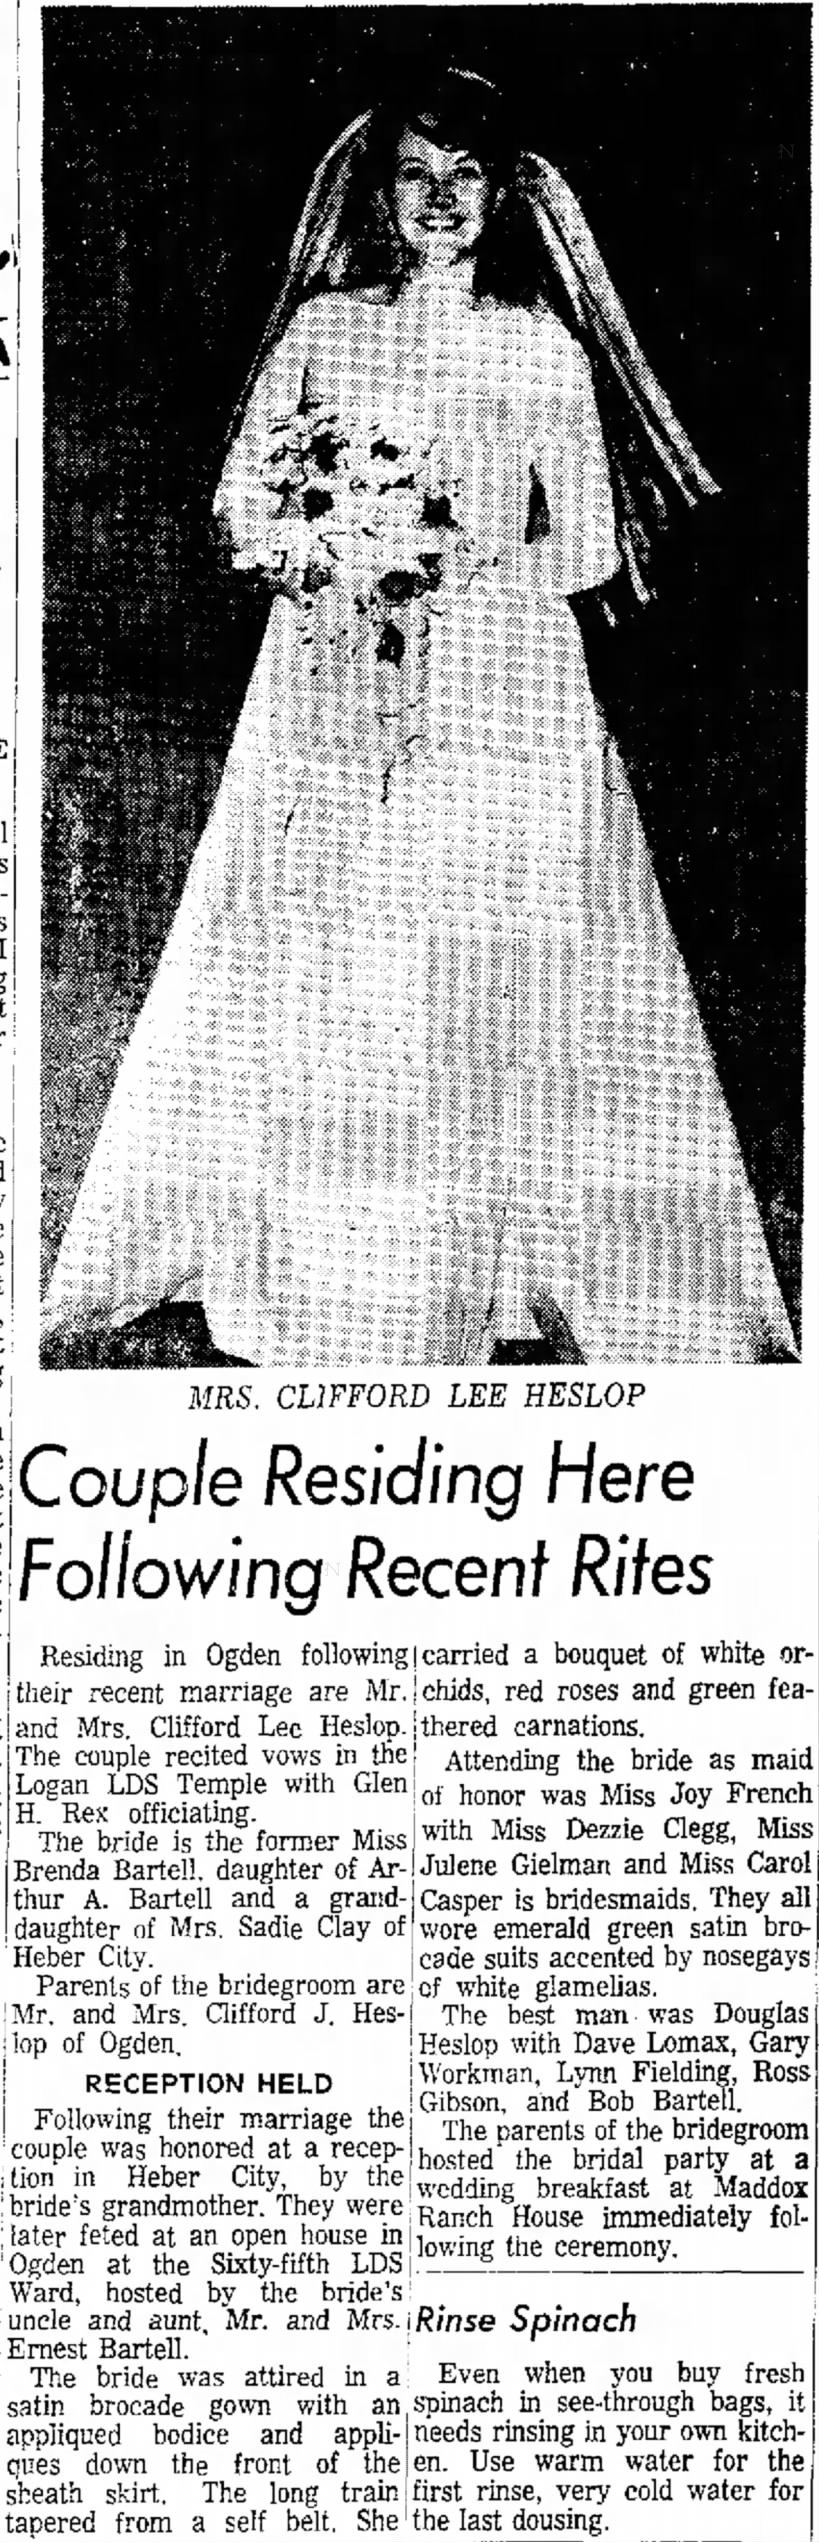 newspaper wedding